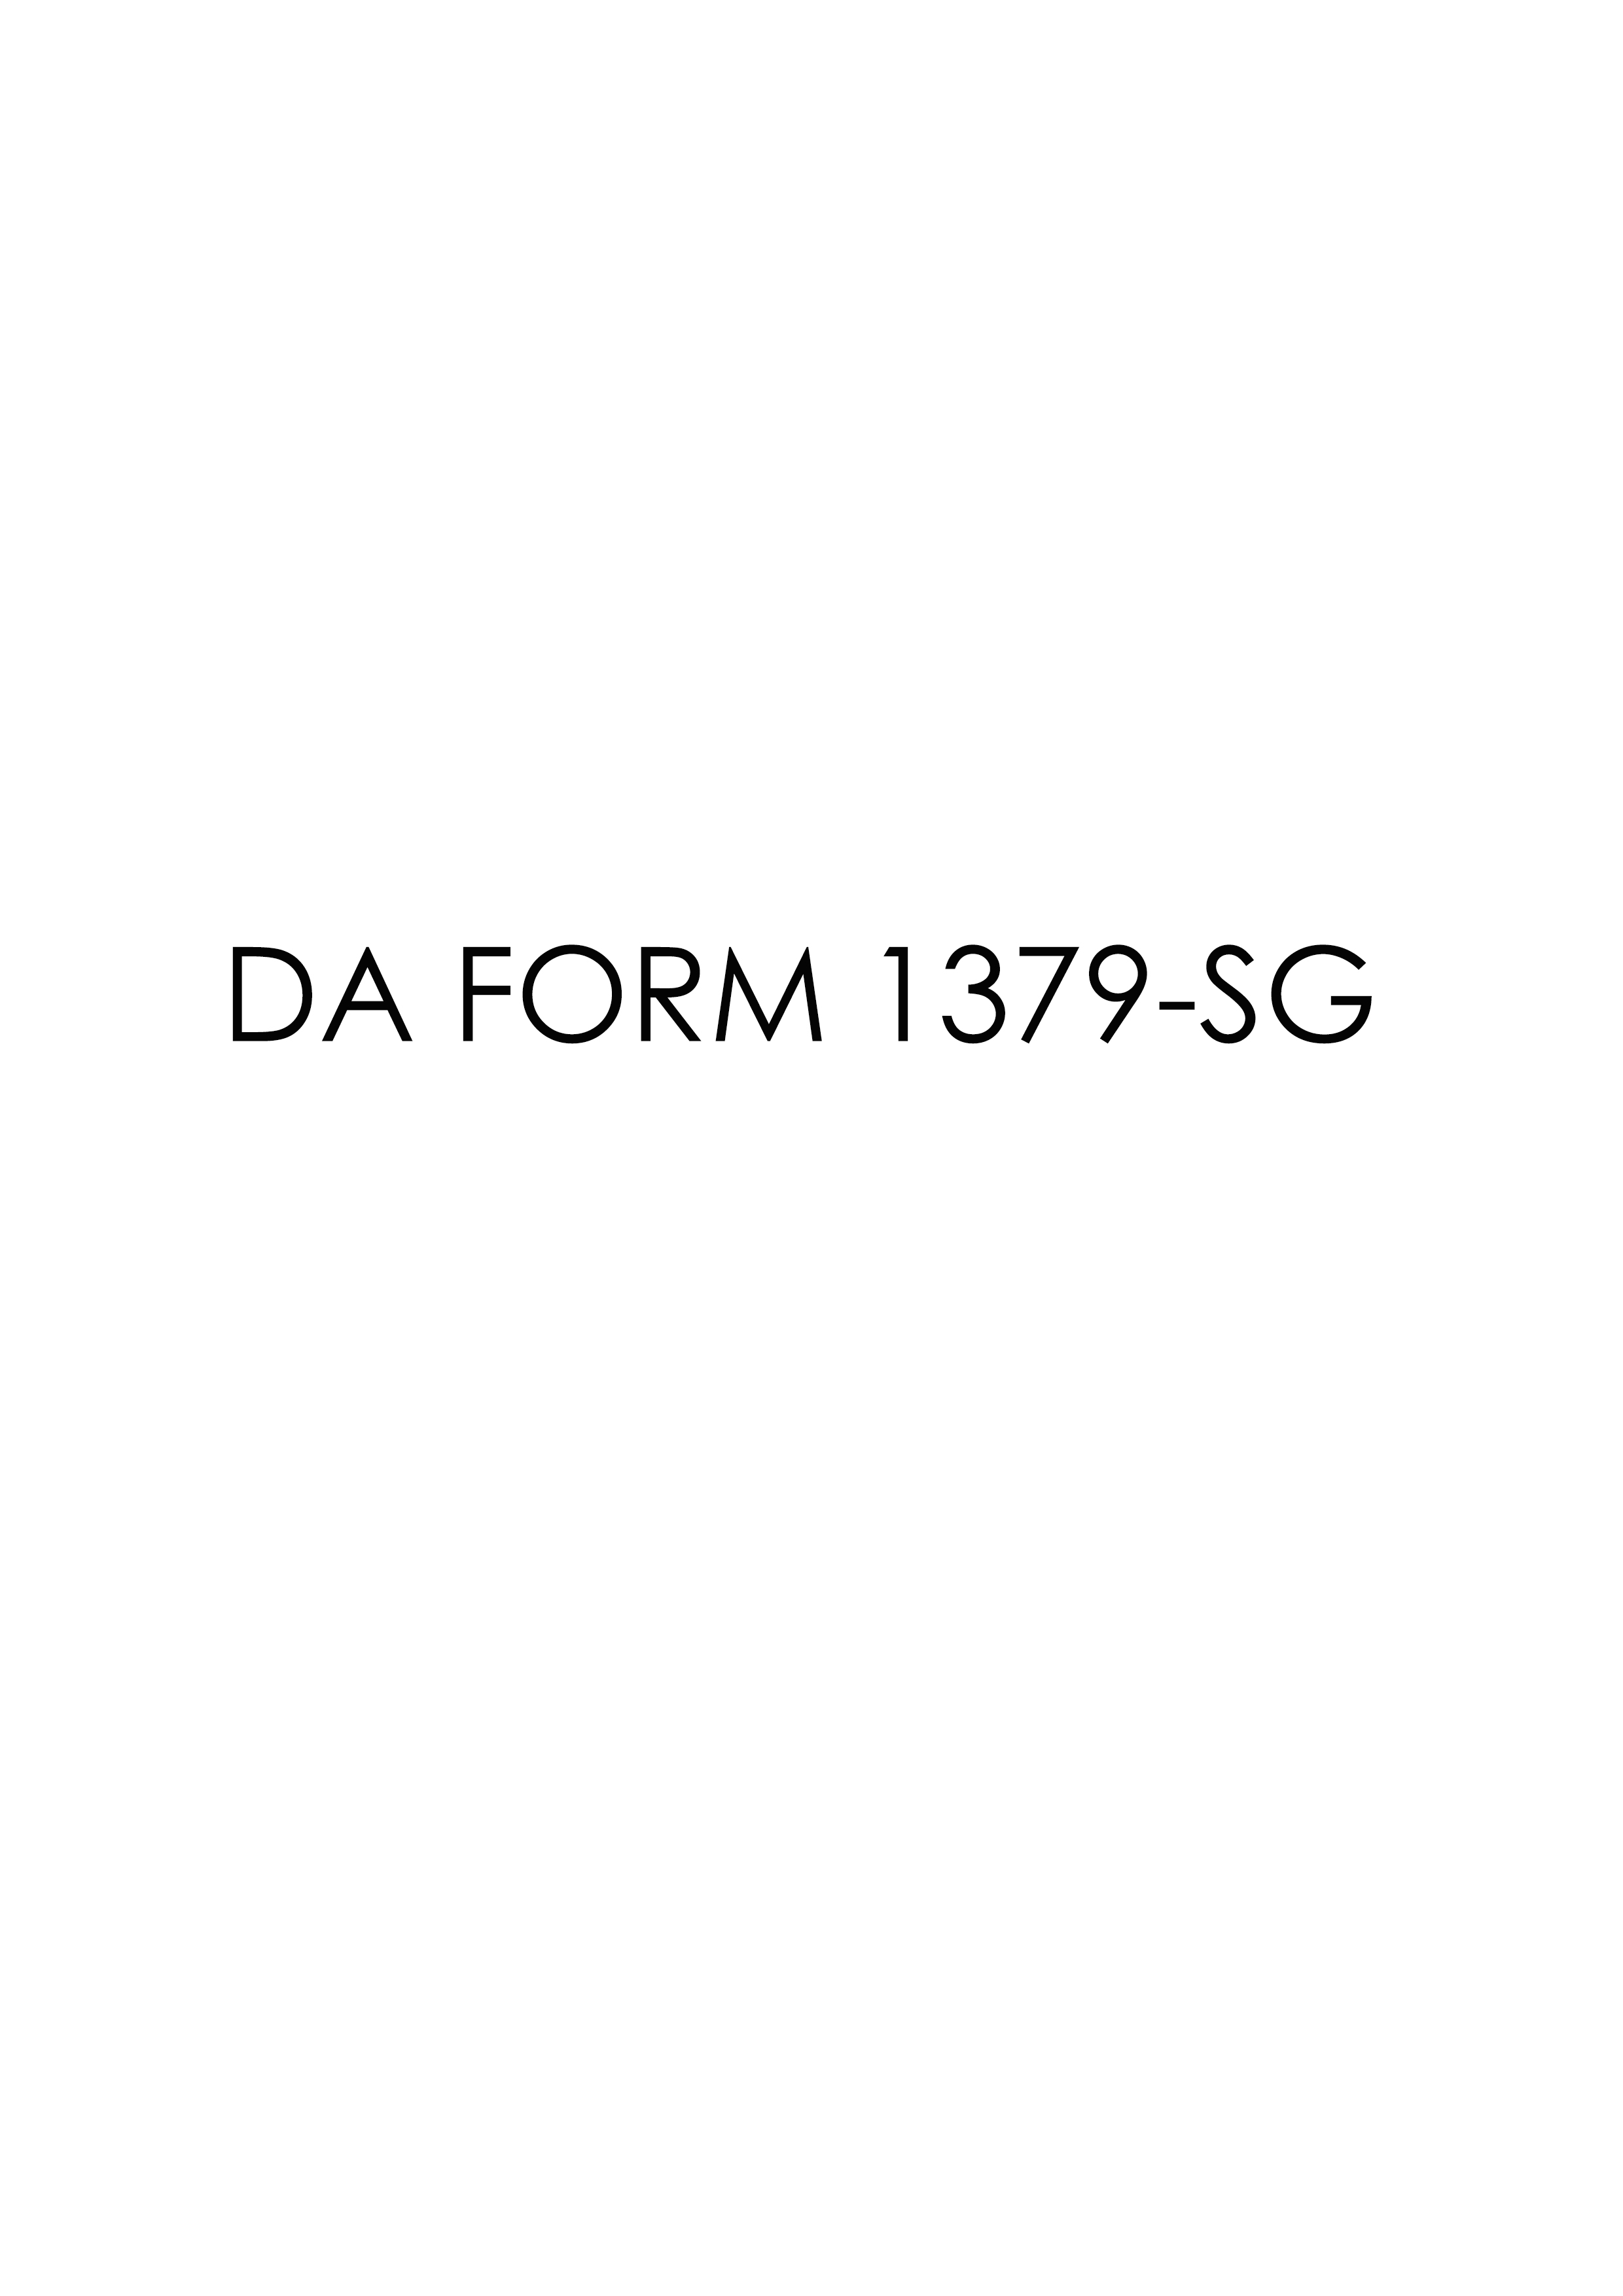 Download da 1379-SG Form